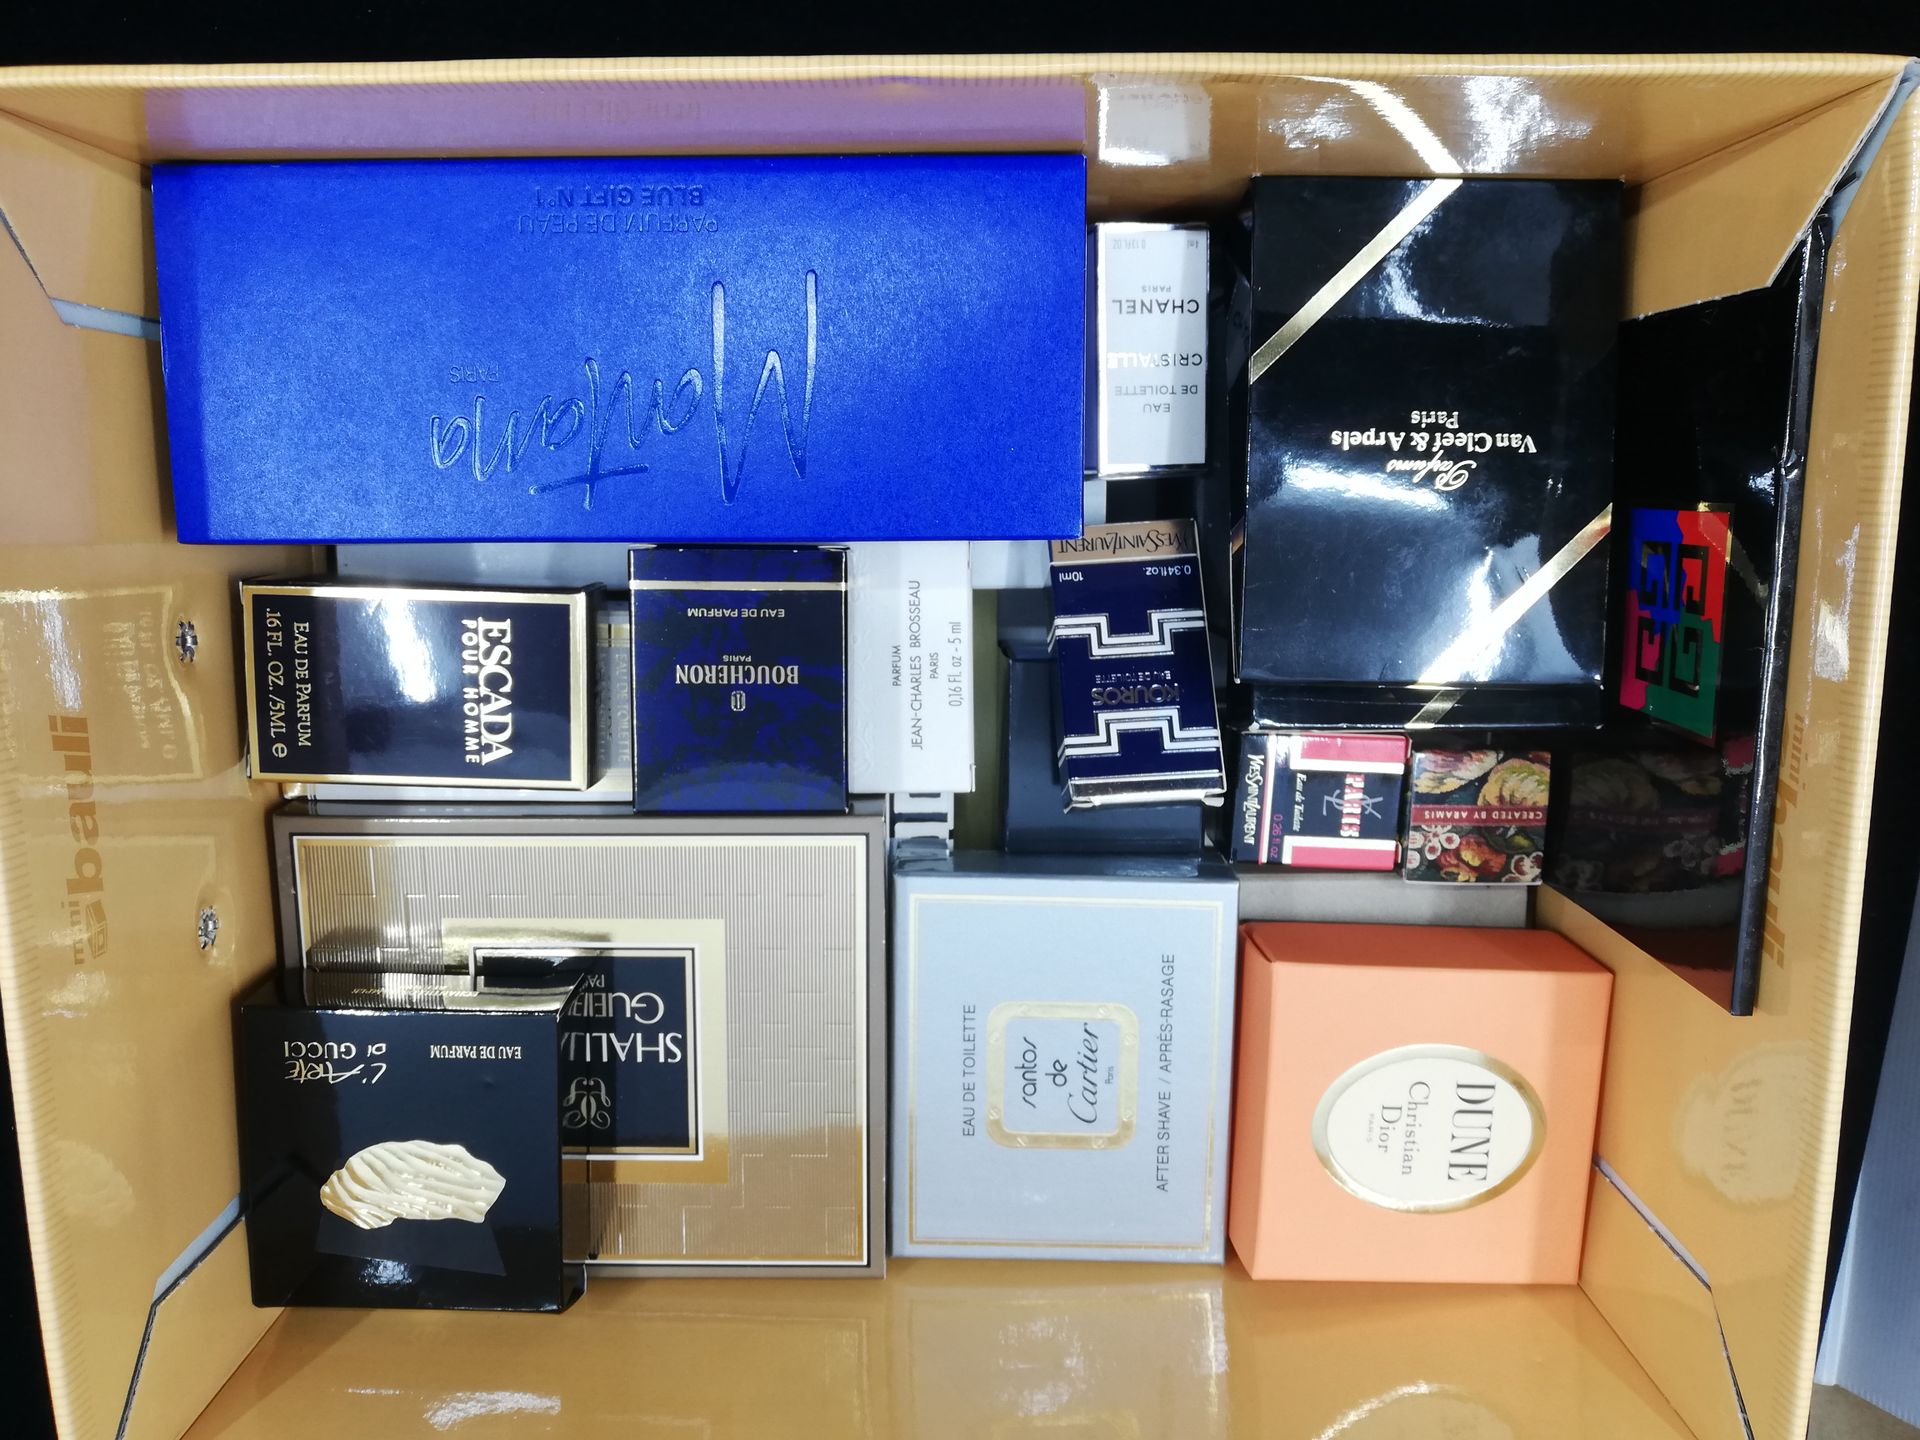 Null 各种香水 - (1990年代)

约有30种小巧的香水，装在有标题的纸盒里，来自Montana, Guerlain, Cartier, Paloma &hellip;